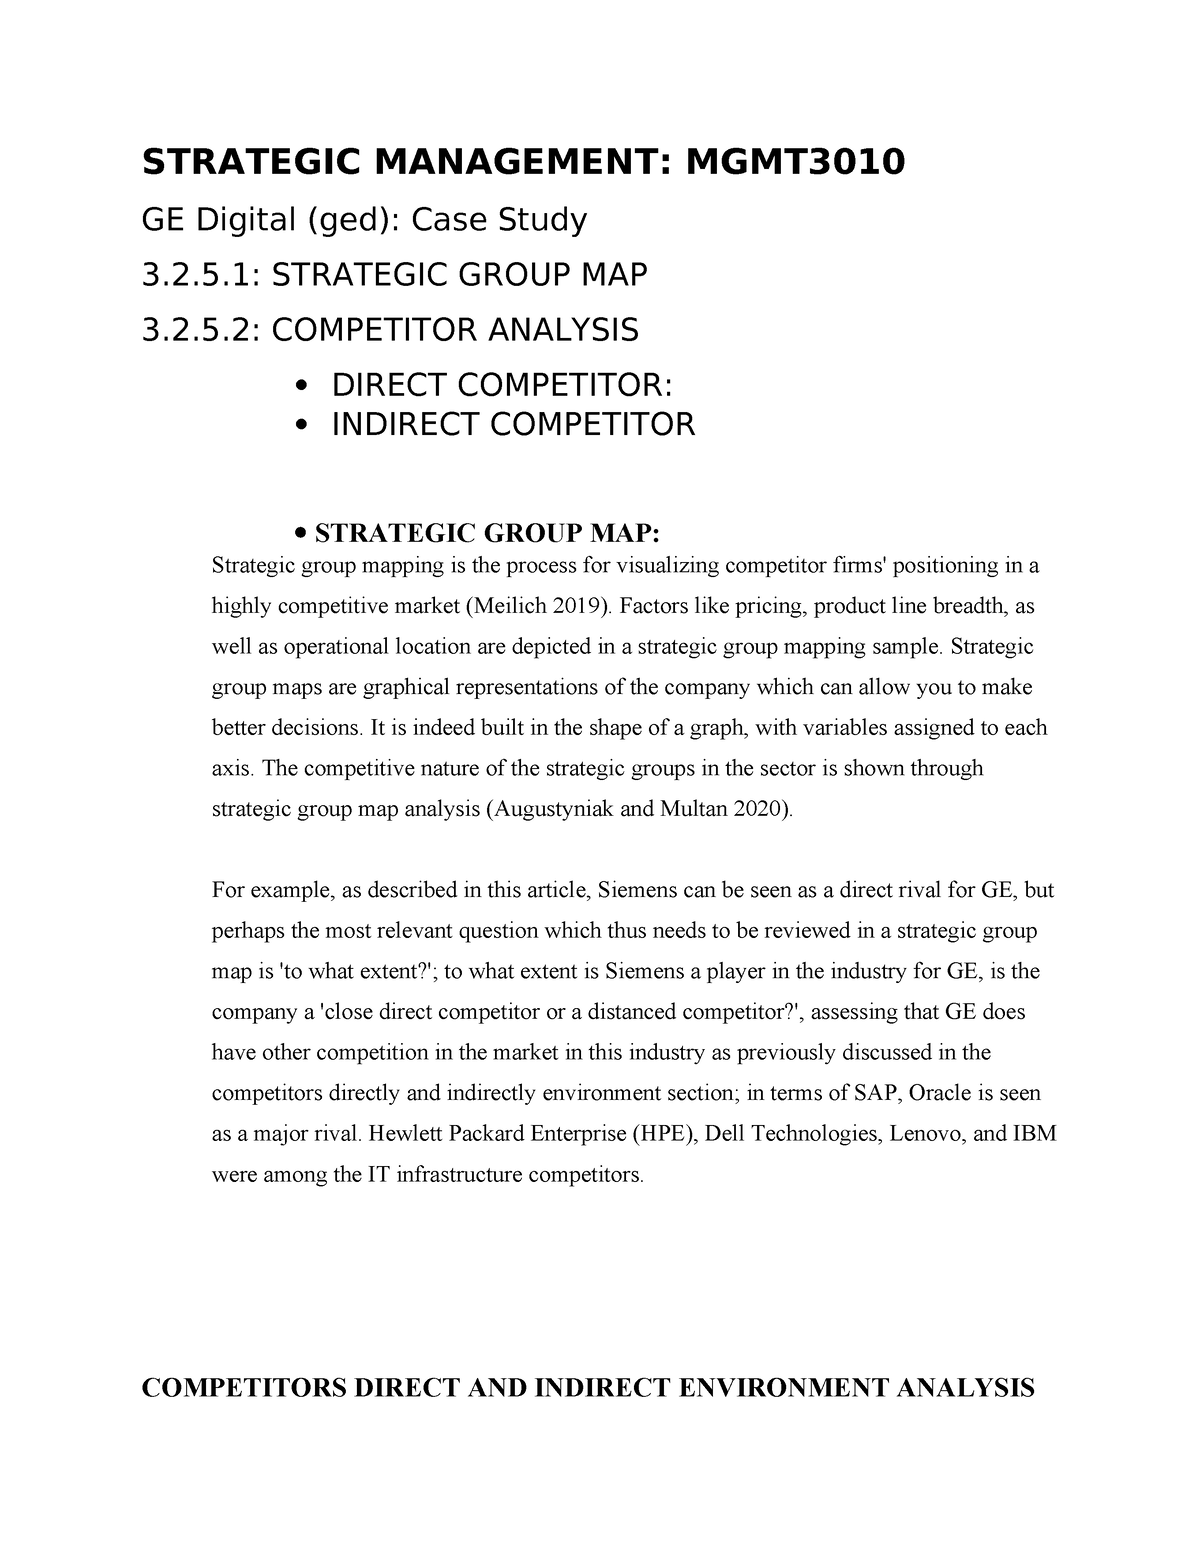 ge case study strategic management